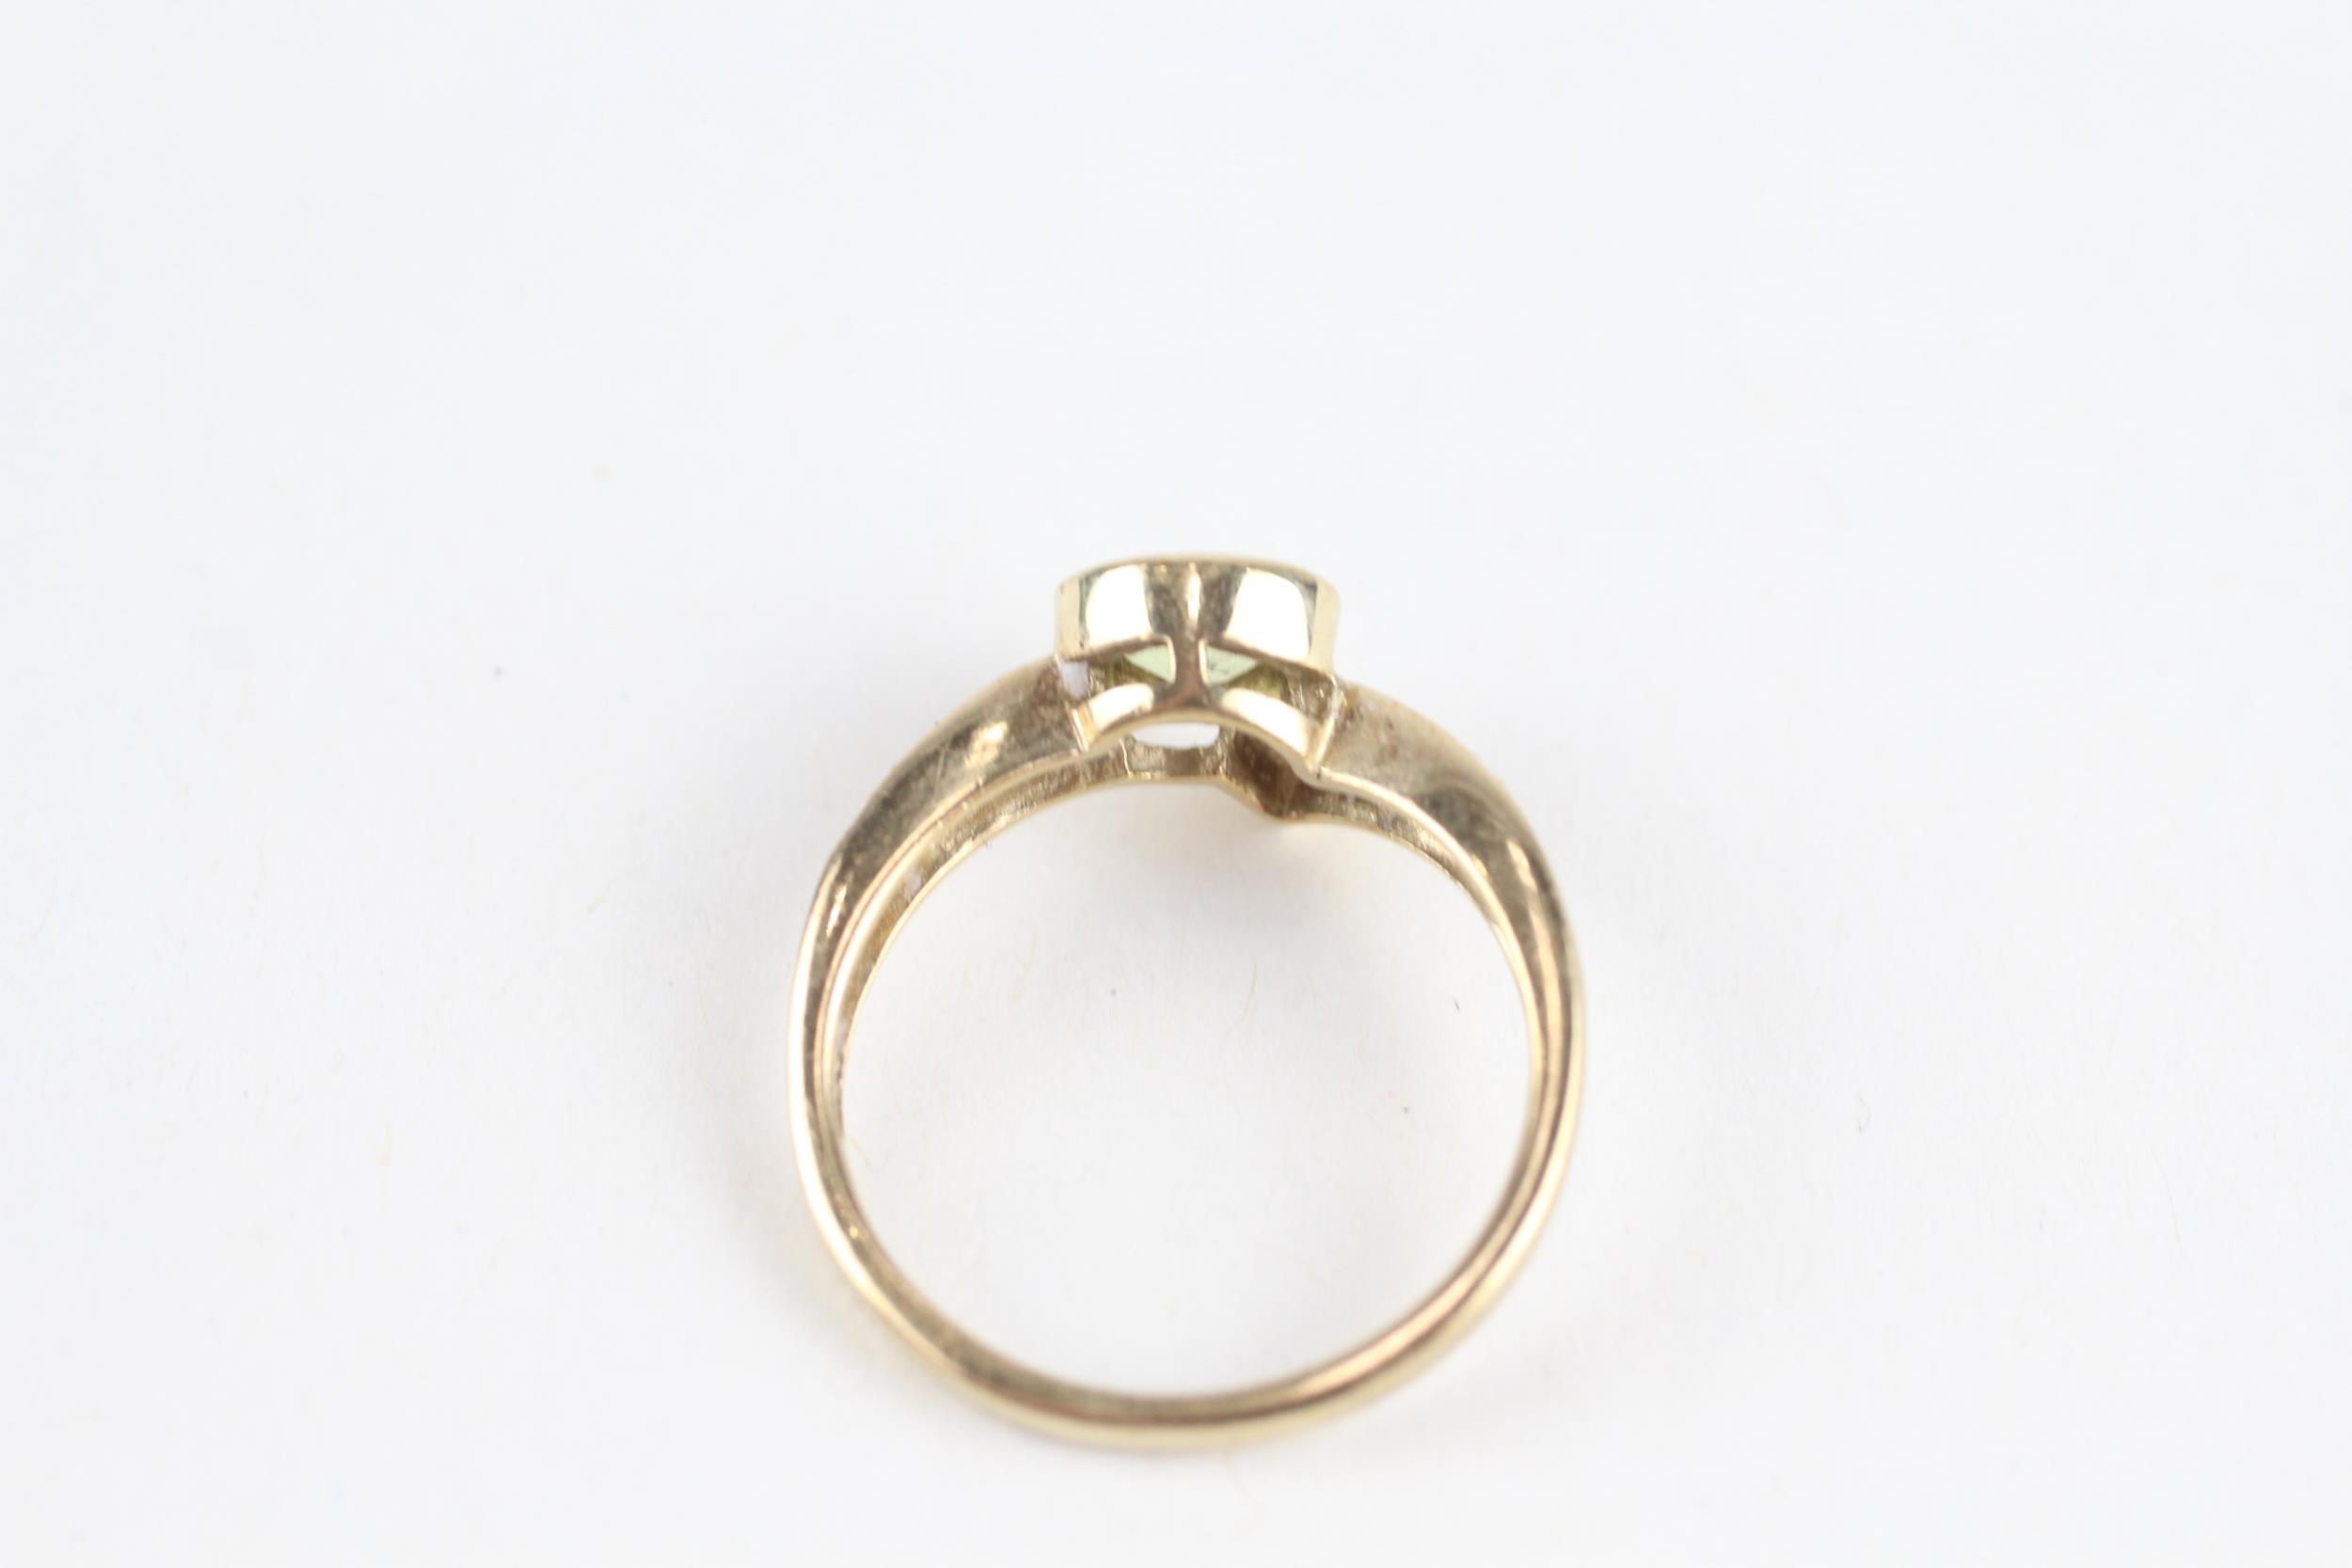 9ct gold green & white gemstone dress ring Size N 1/2 - 2.8 g - Image 4 of 4